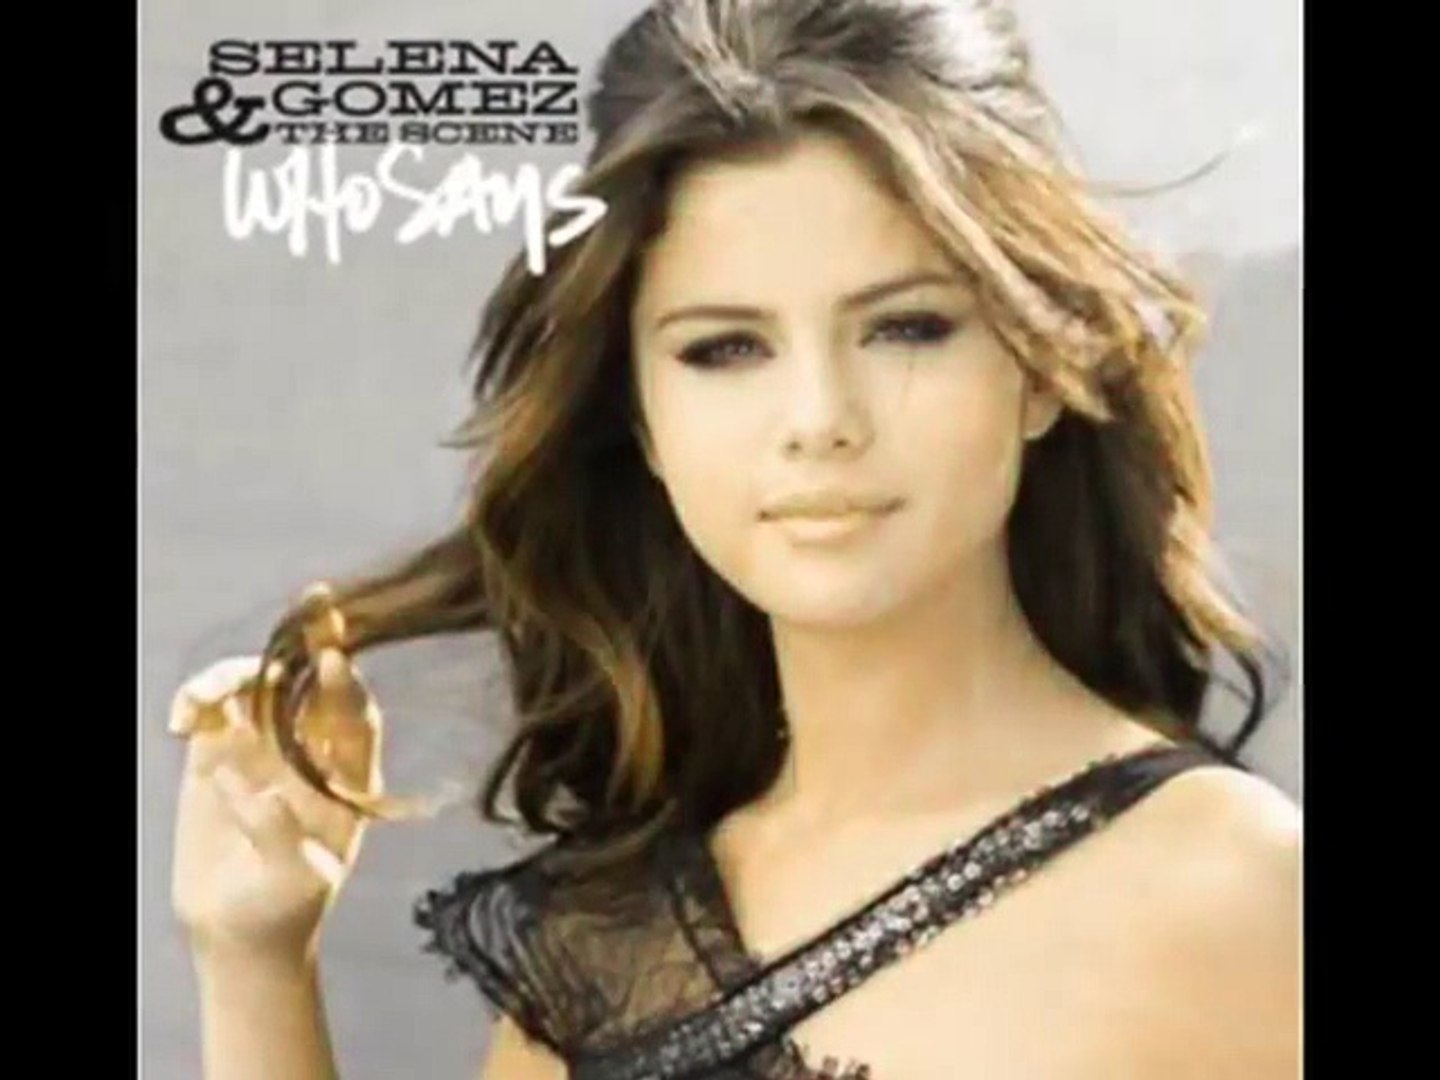 Selena Gomez - Who Says [Lyrics]